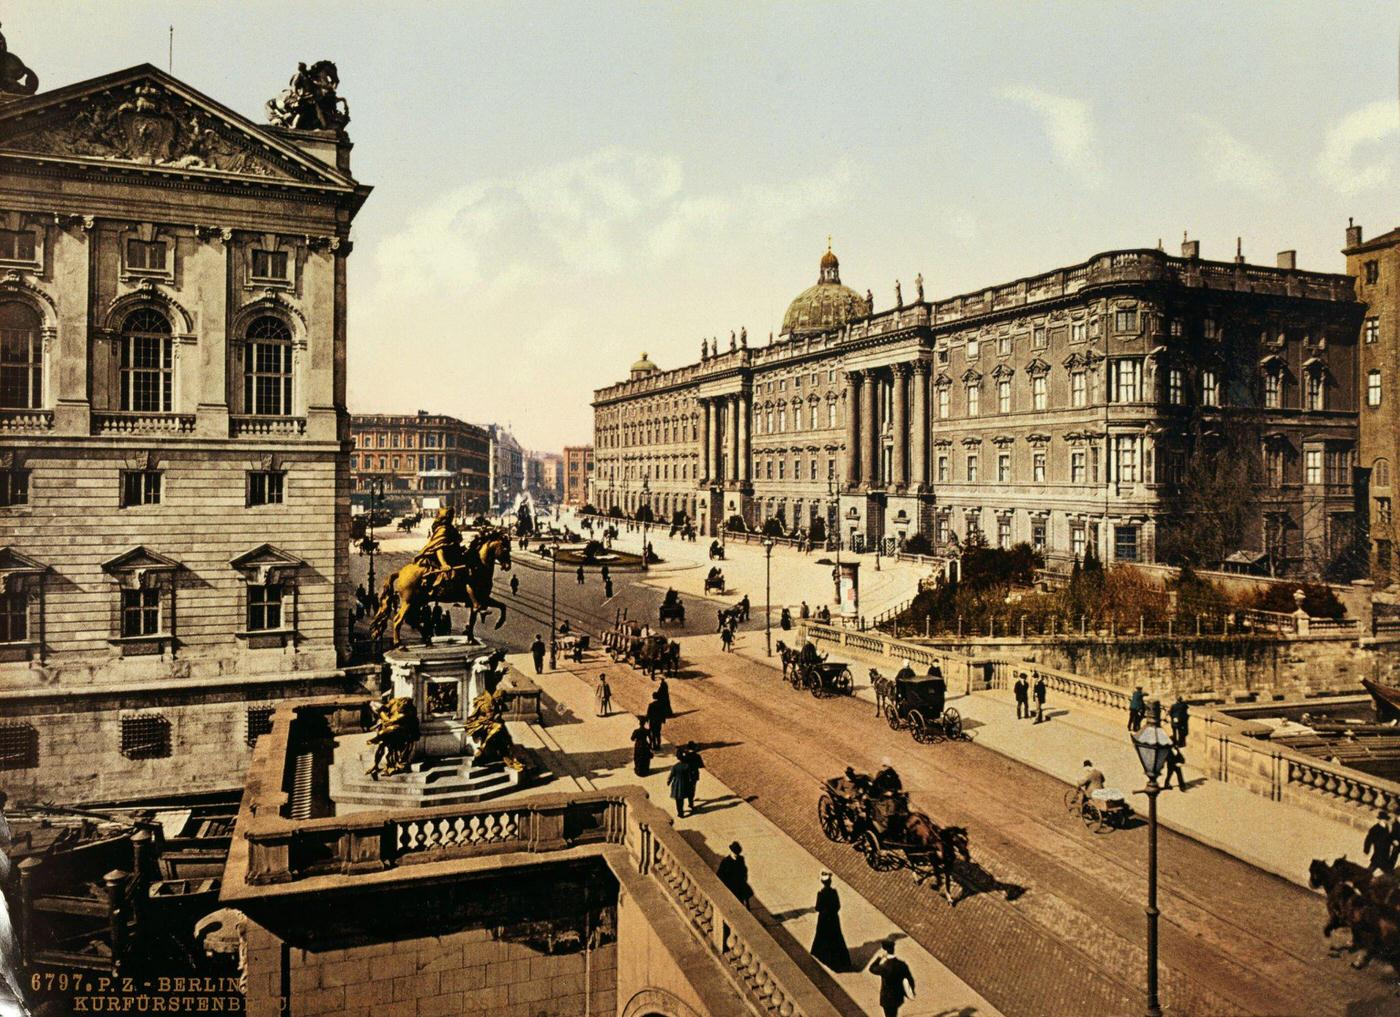 Kurfürstenbrucke and the Royal Castle, Berlin, Germany, late 19th century.